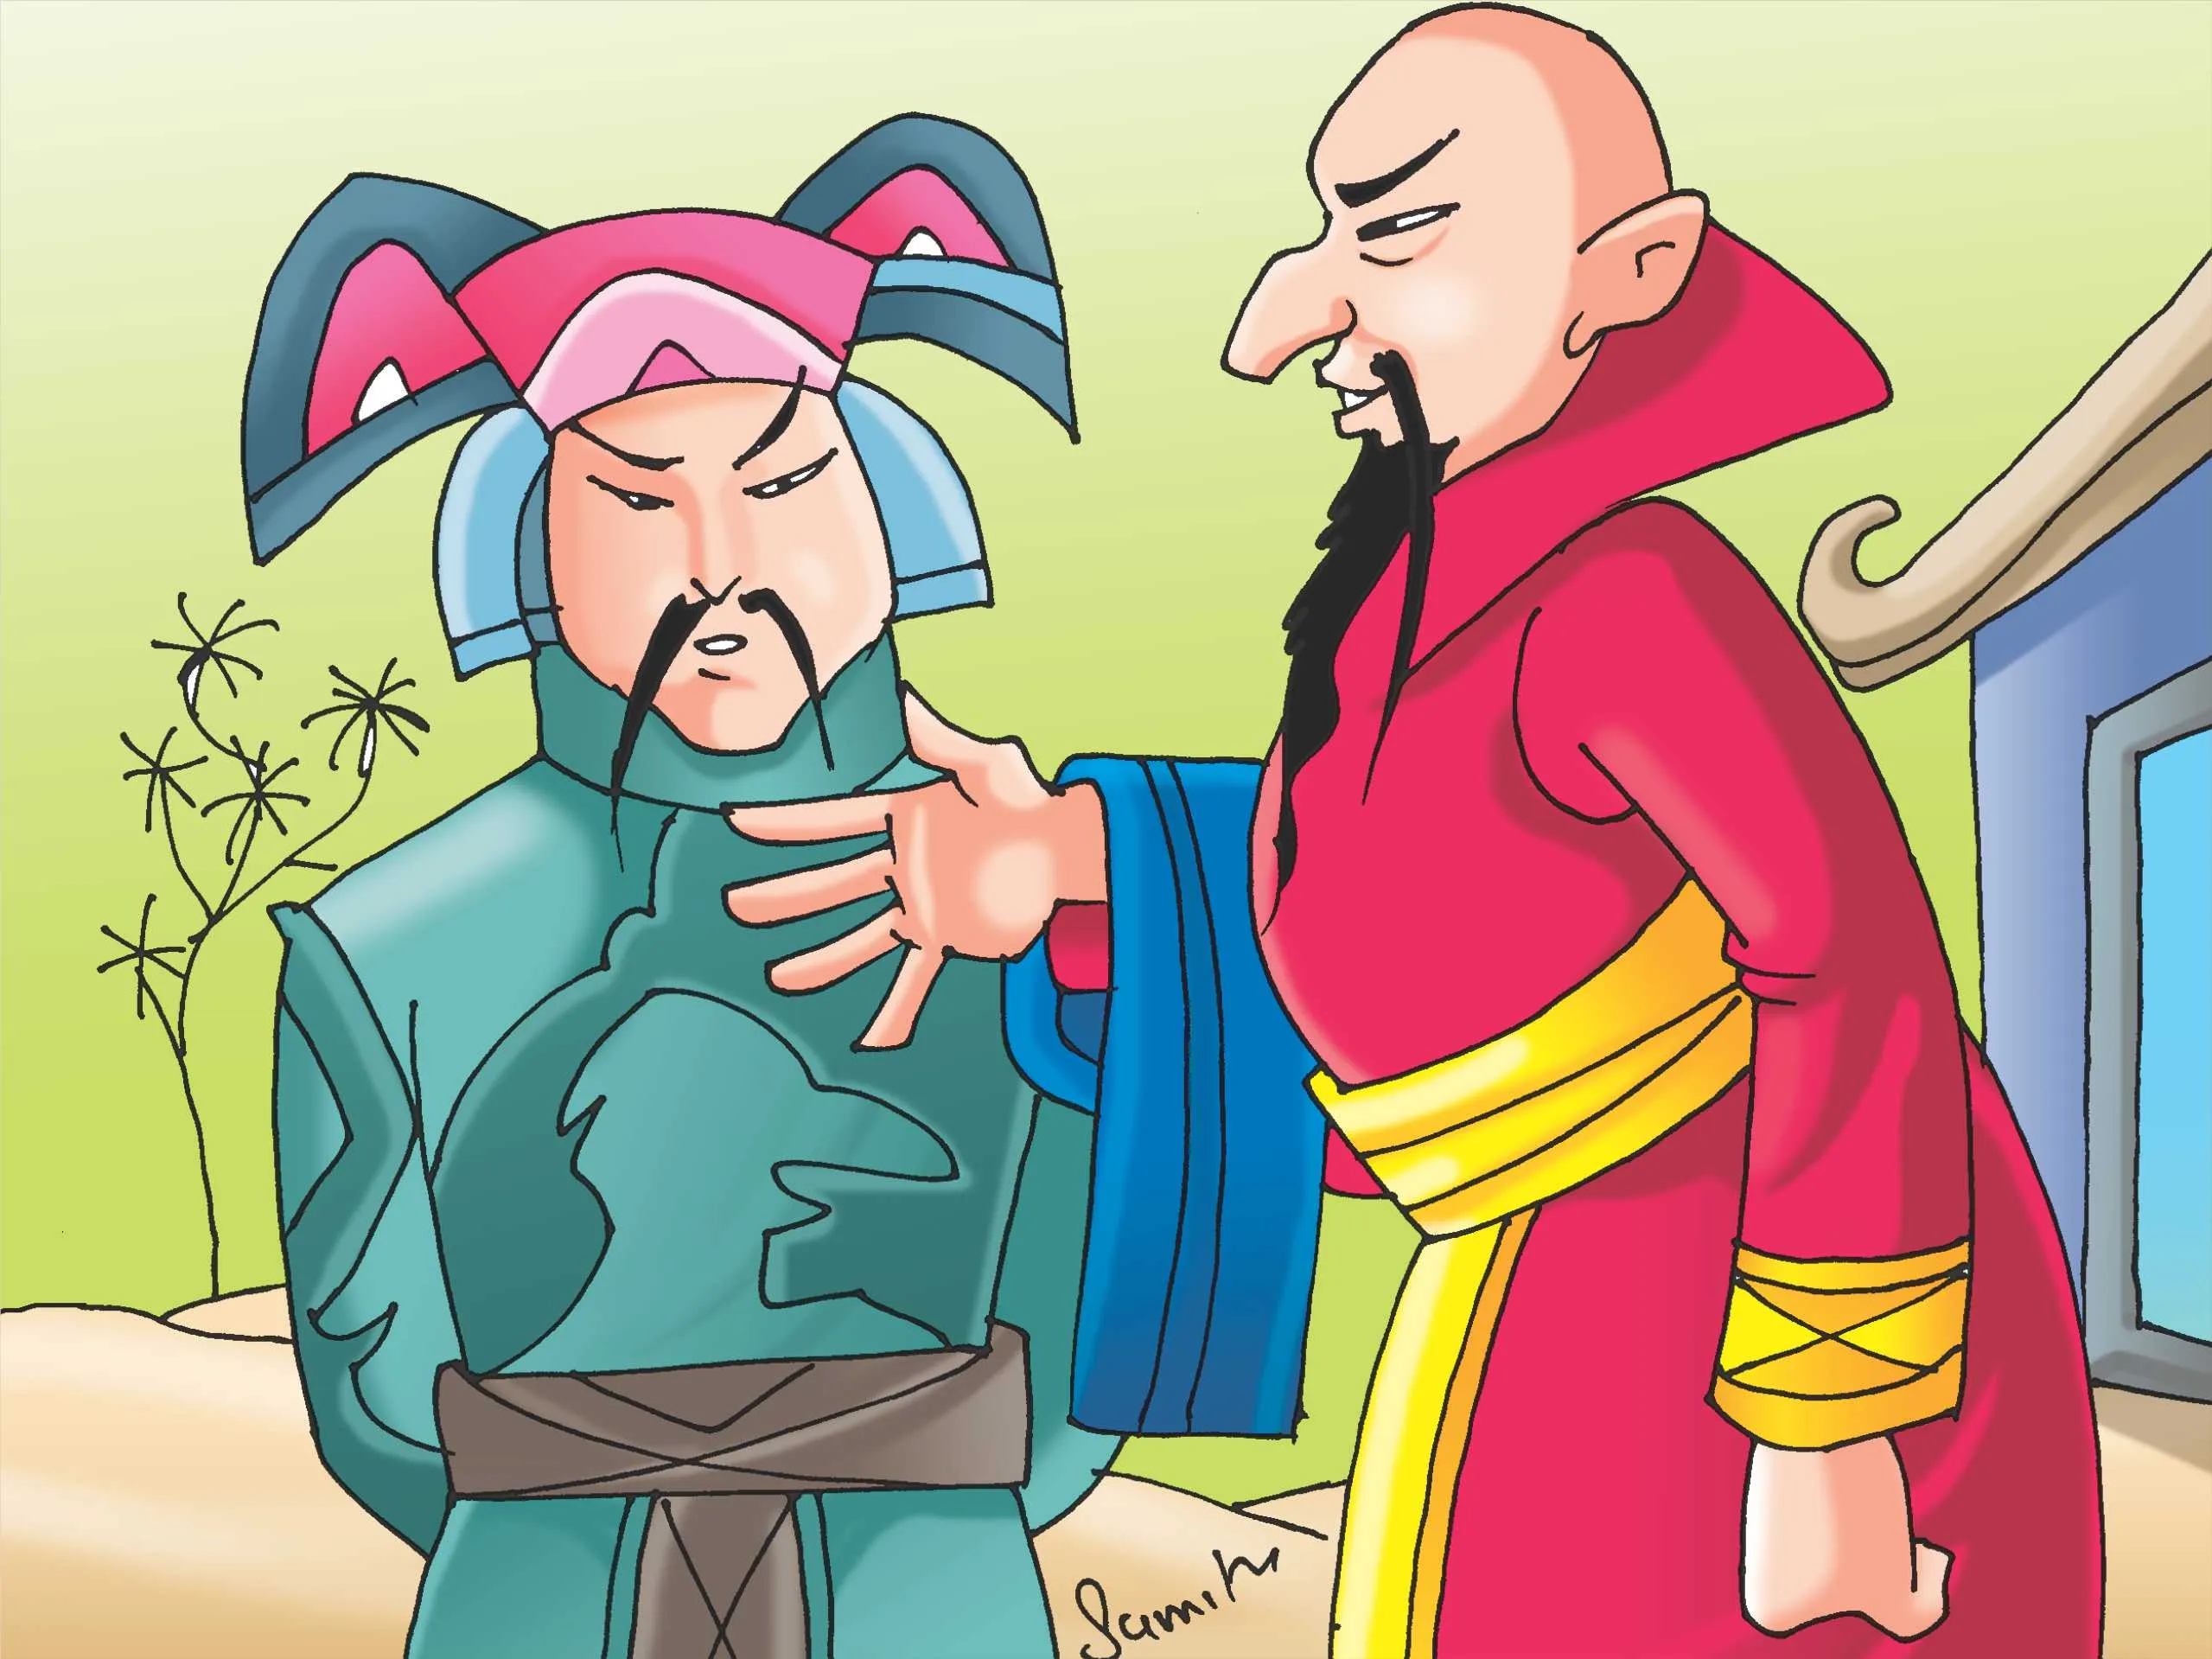 Confucius talking to king Cartoon image